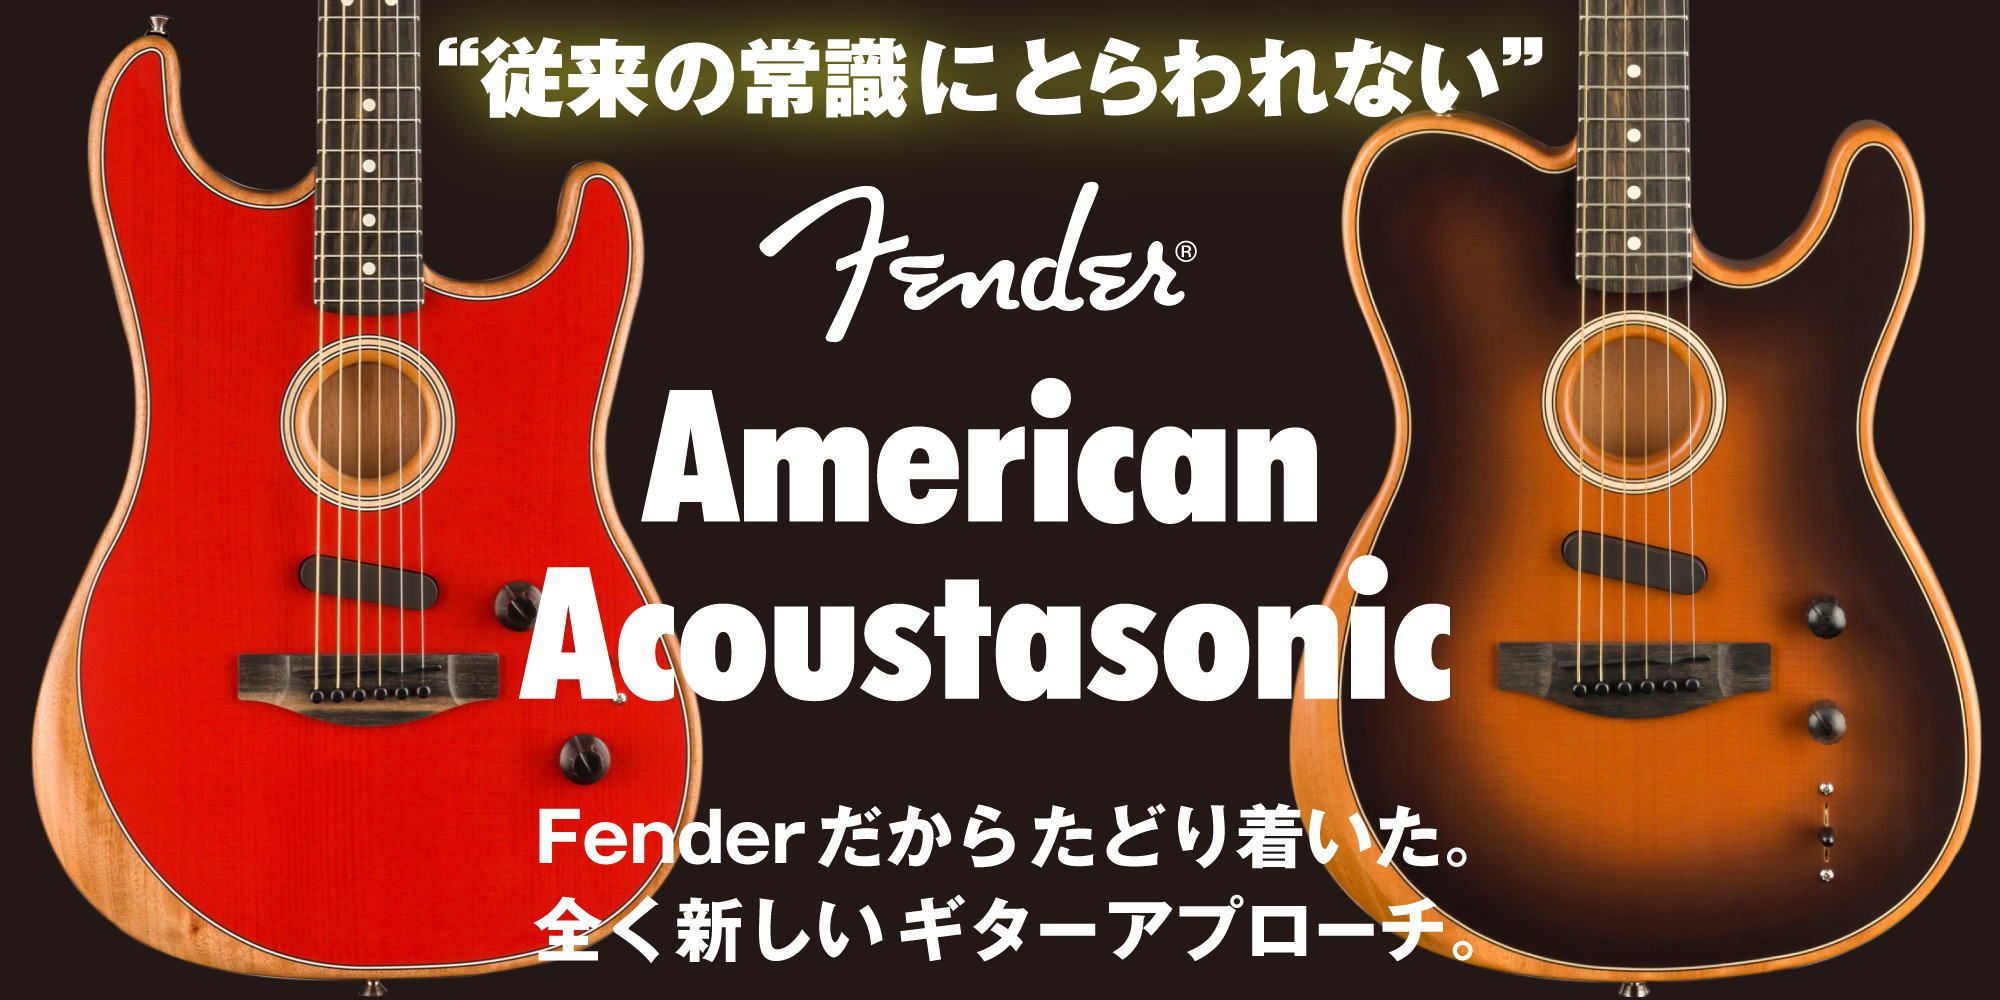 【Fender AMERICAN ACOUSTASONIC】